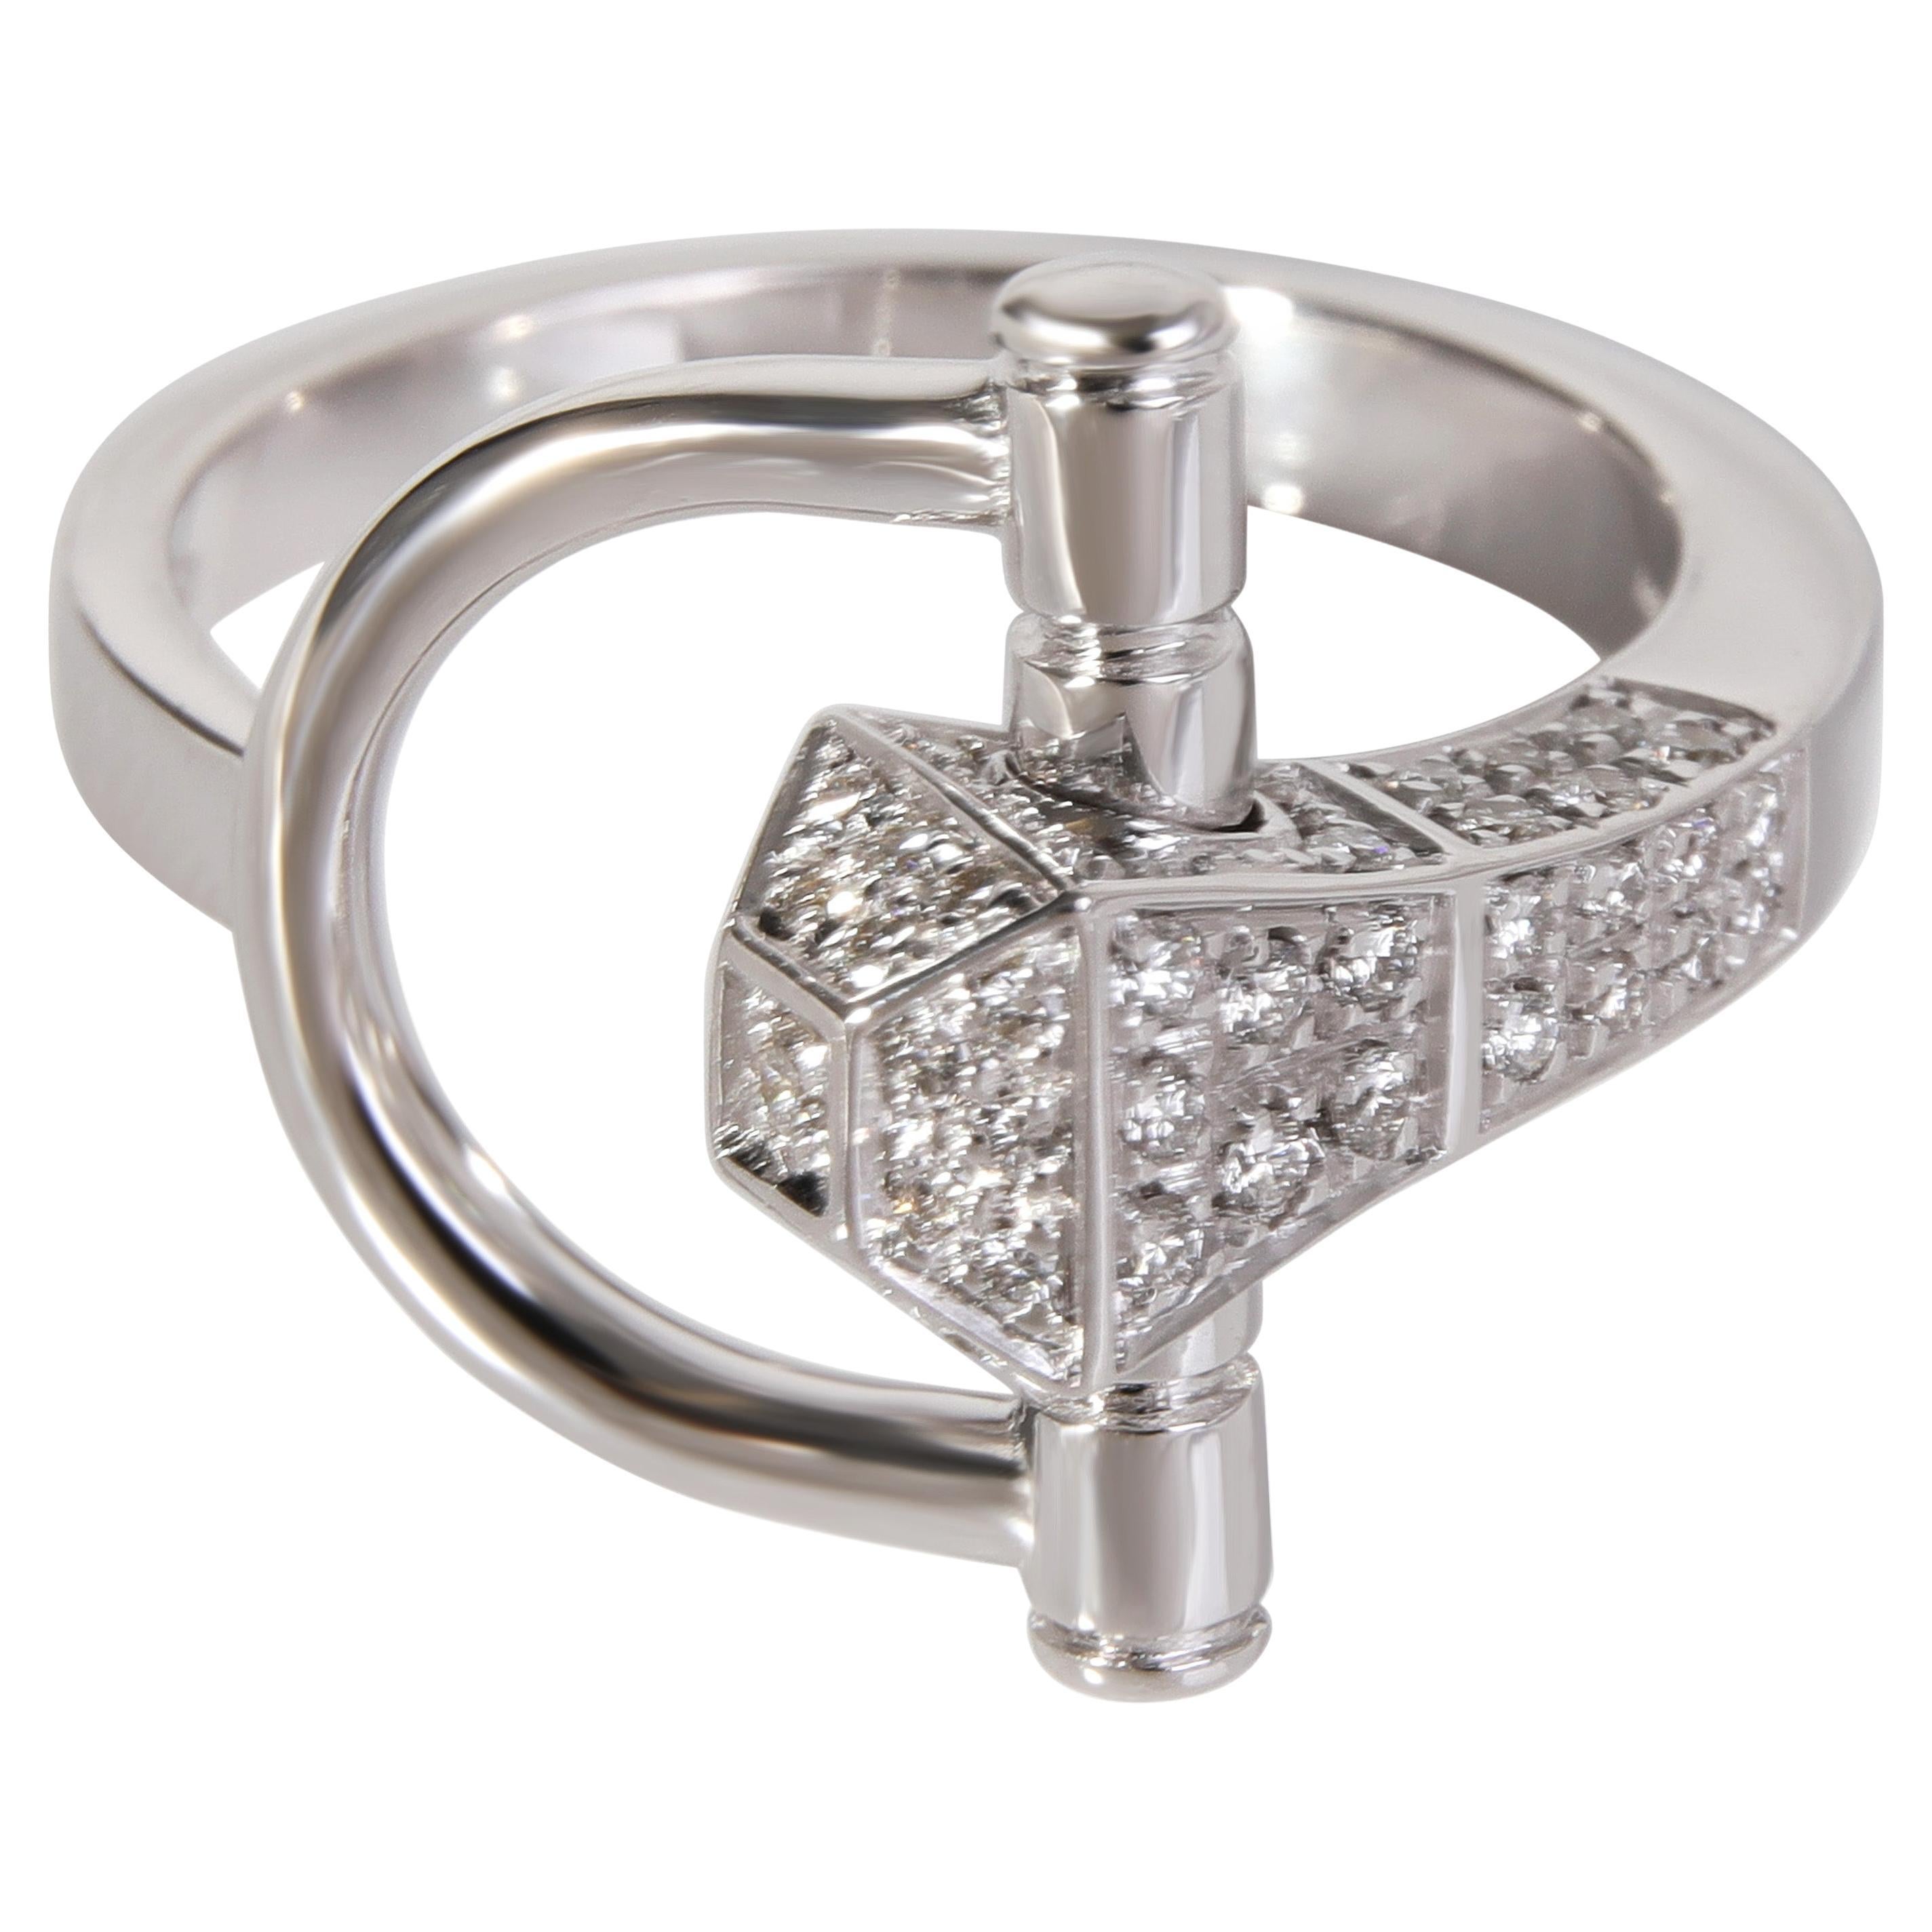 Gucci Chiodo Horsebit Diamond Ring in 18k White Gold 0.40 Ctw For Sale